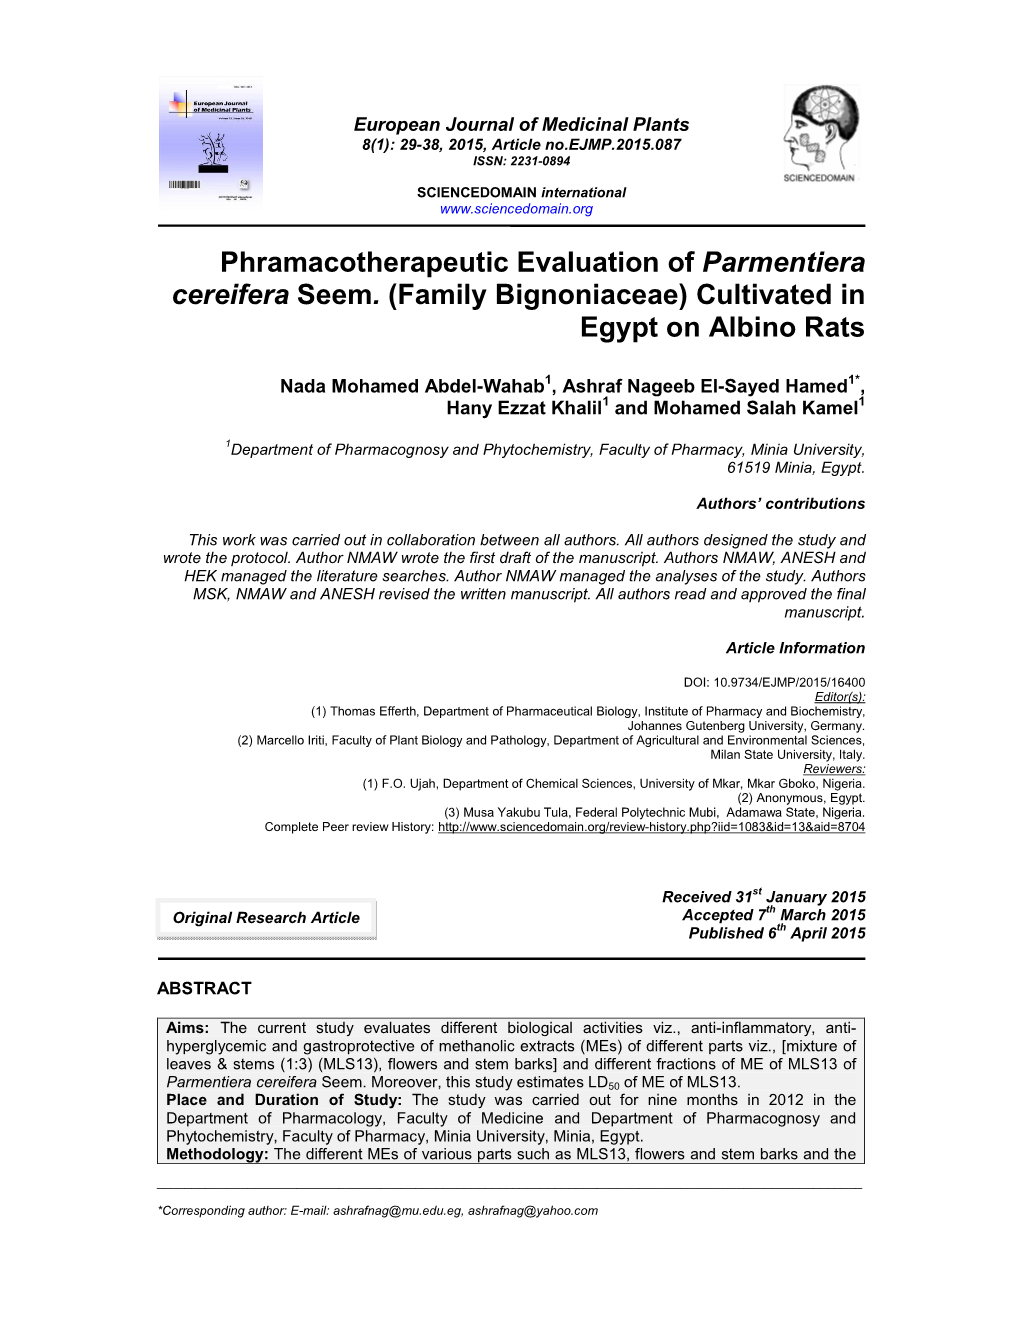 Phramacotherapeutic Evaluation of Parmentiera Cereifera Seem. (Family Bignoniaceae) Cultivated in Egypt on Albino Rats